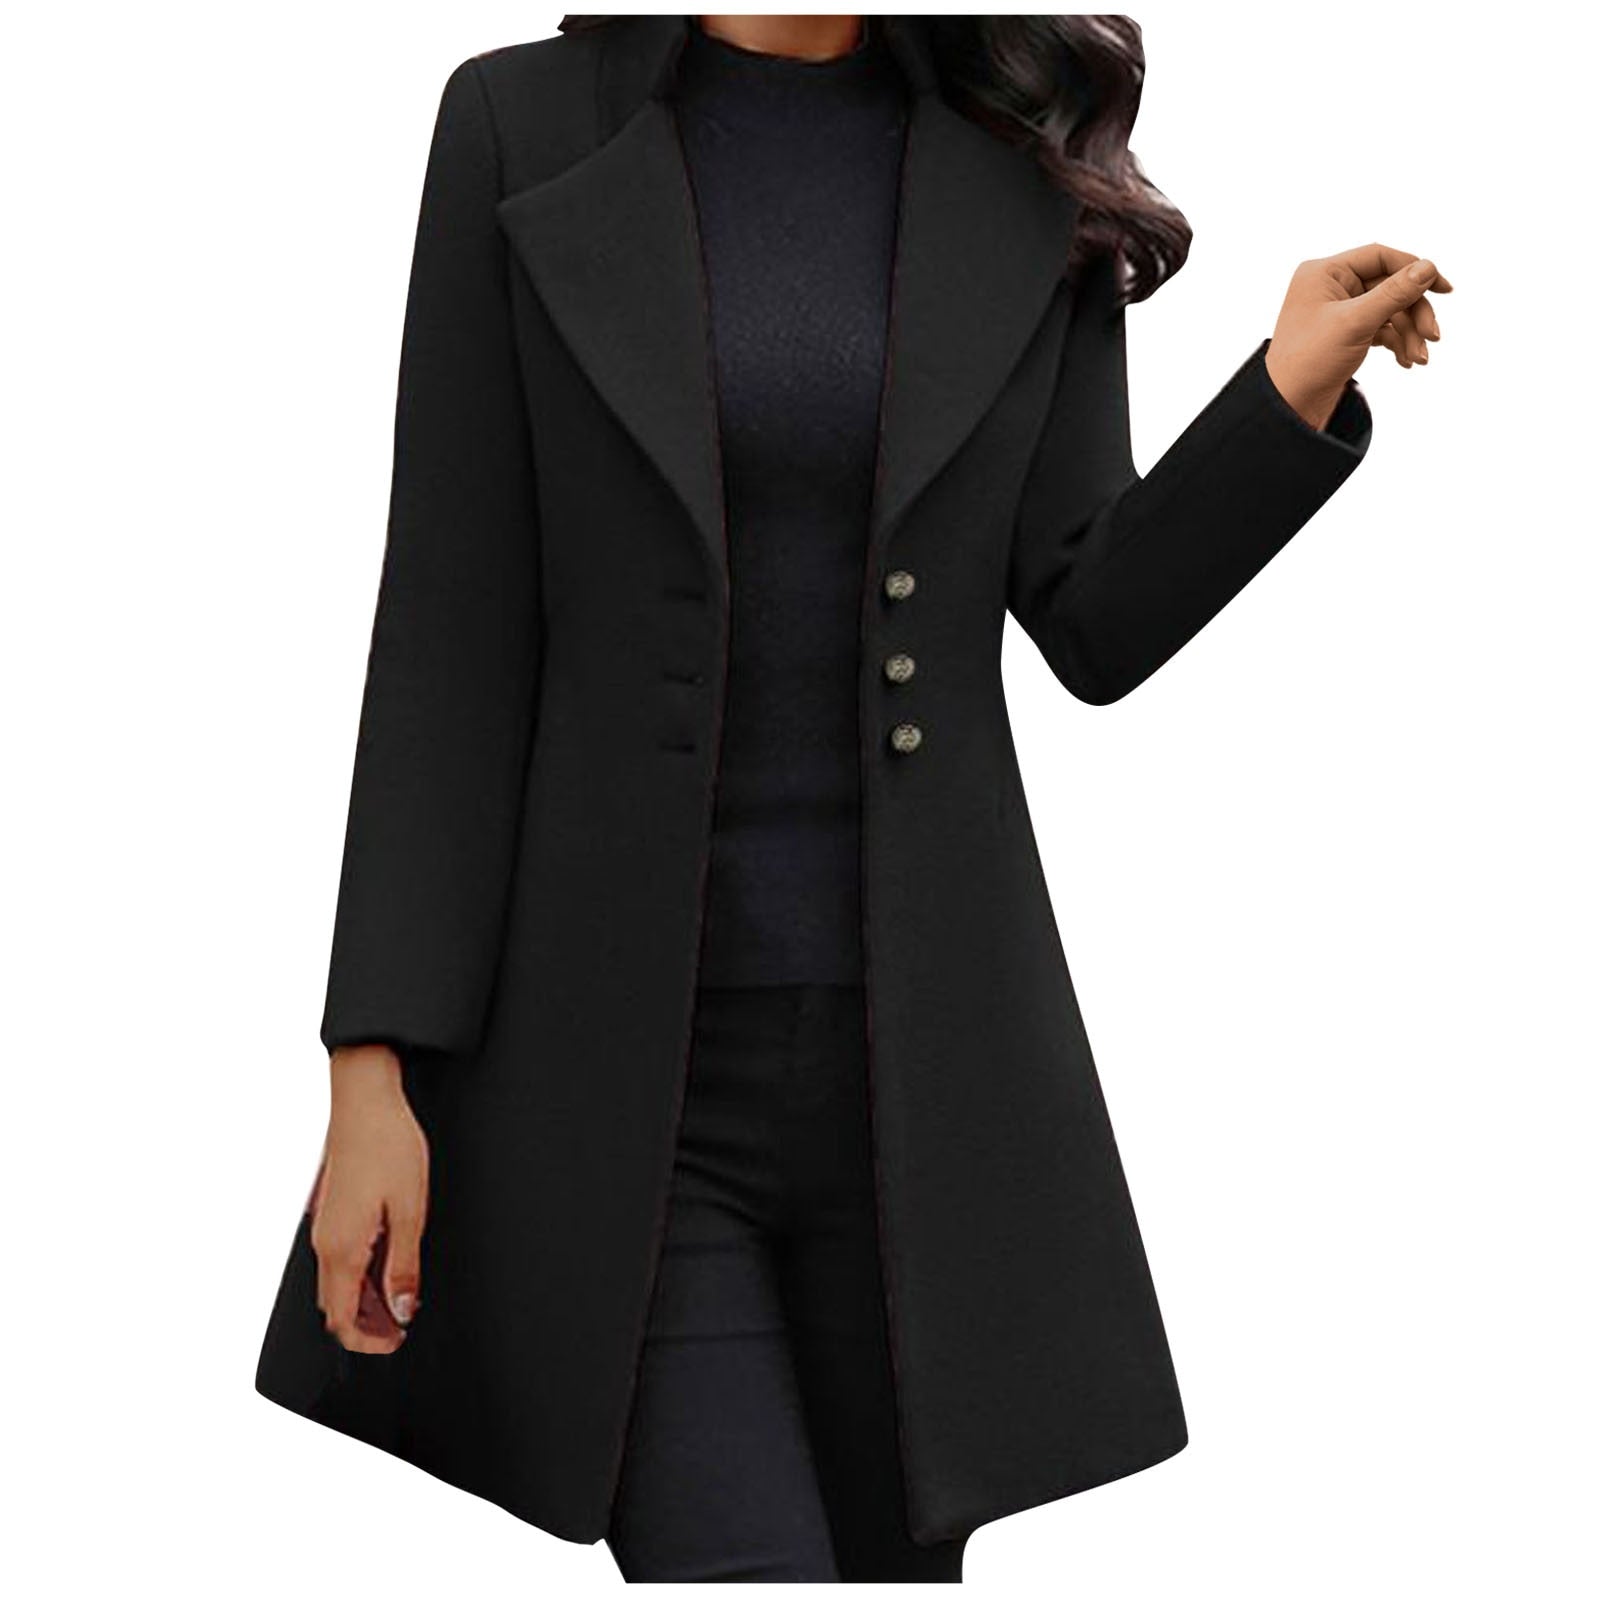 Women Long Sleeve Woolen Coat Lapel Solid Color Long Jacket Coat Korean Version New Fall Fashion Long Cardigan